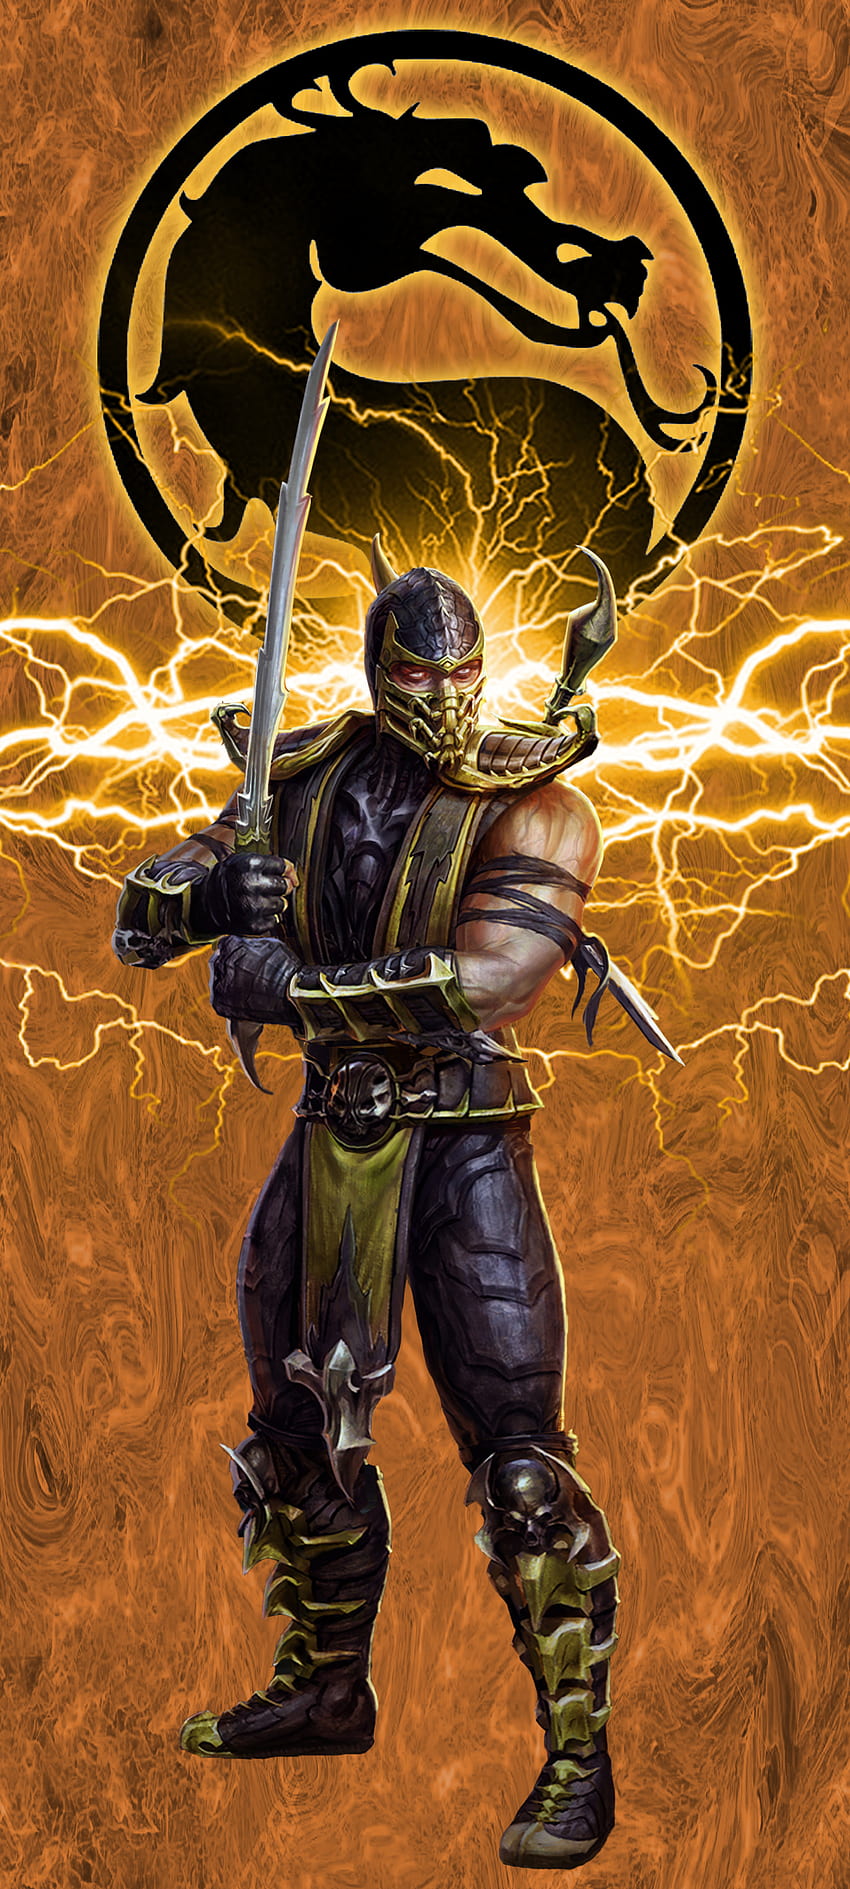 SCORPION Fatality (Mortal Kombat) by GamesMoviesWorld on DeviantArt